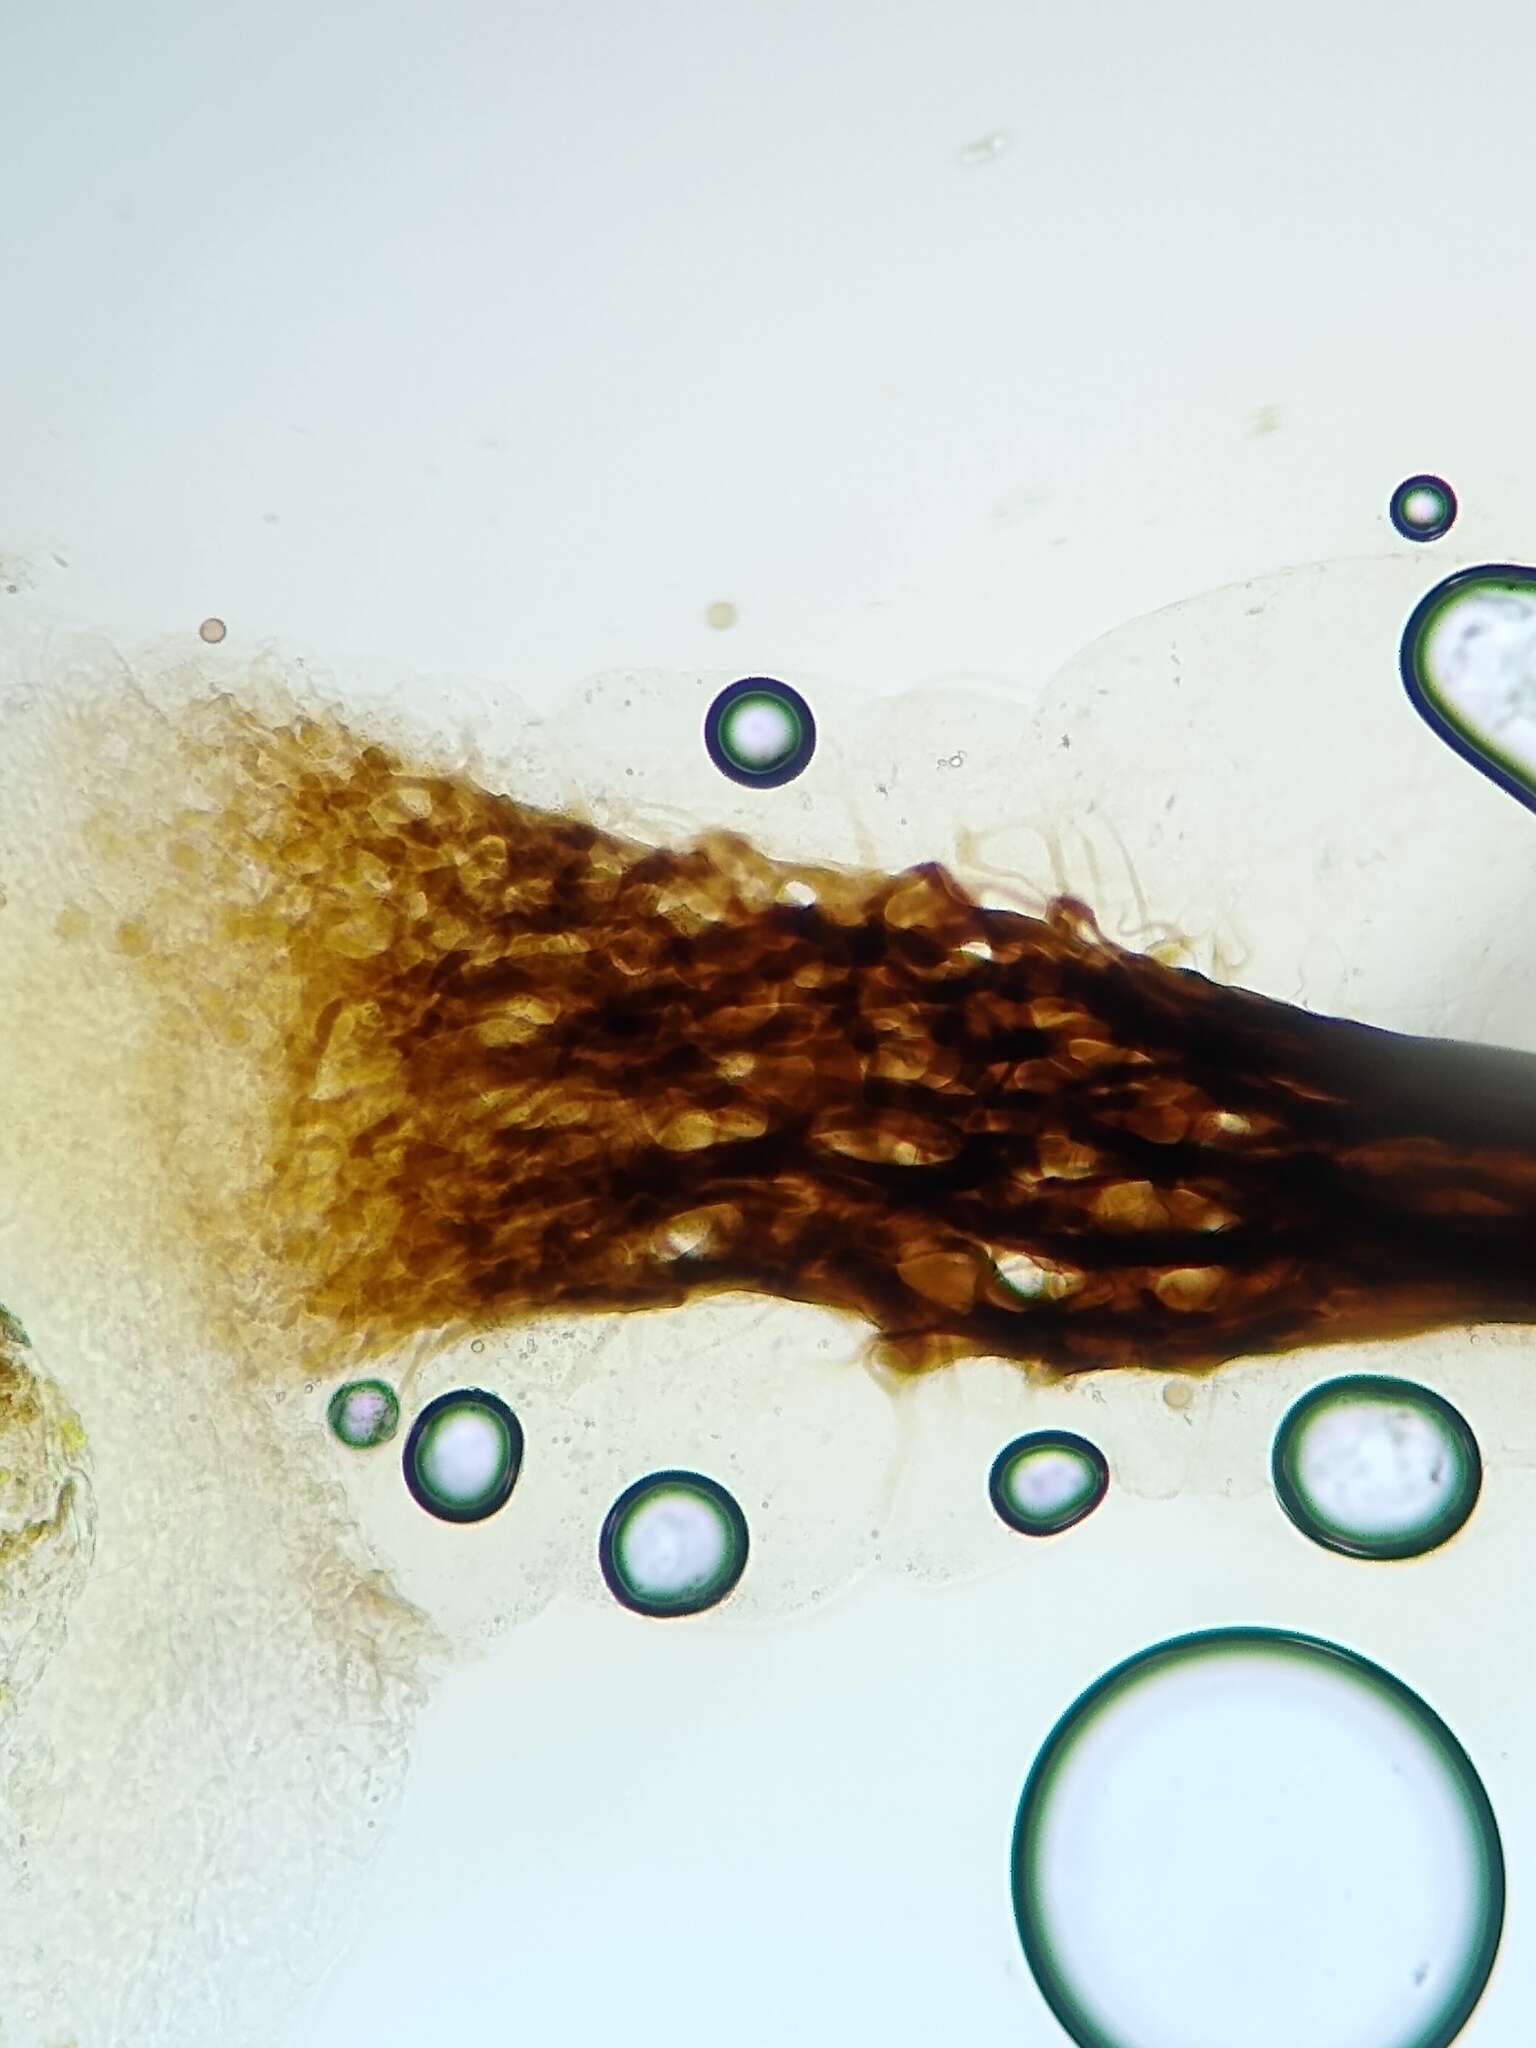 Image of Comatricha elegans (Racib.) G. Lister 1909